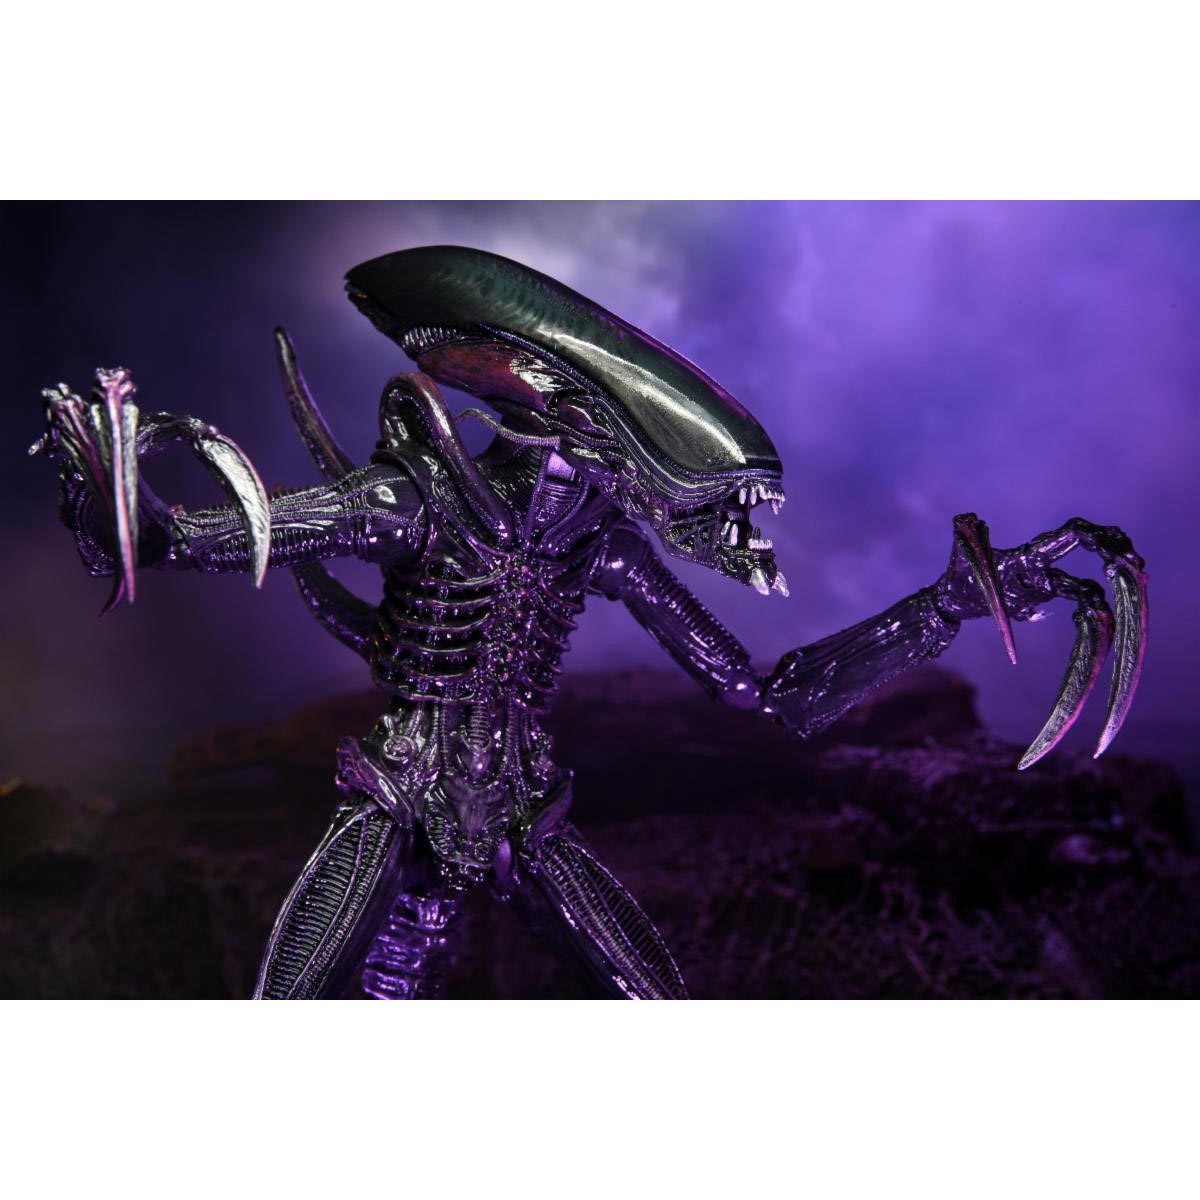 Alien vs. Predator Aliens Set of 3 Figures (Movie Deco)